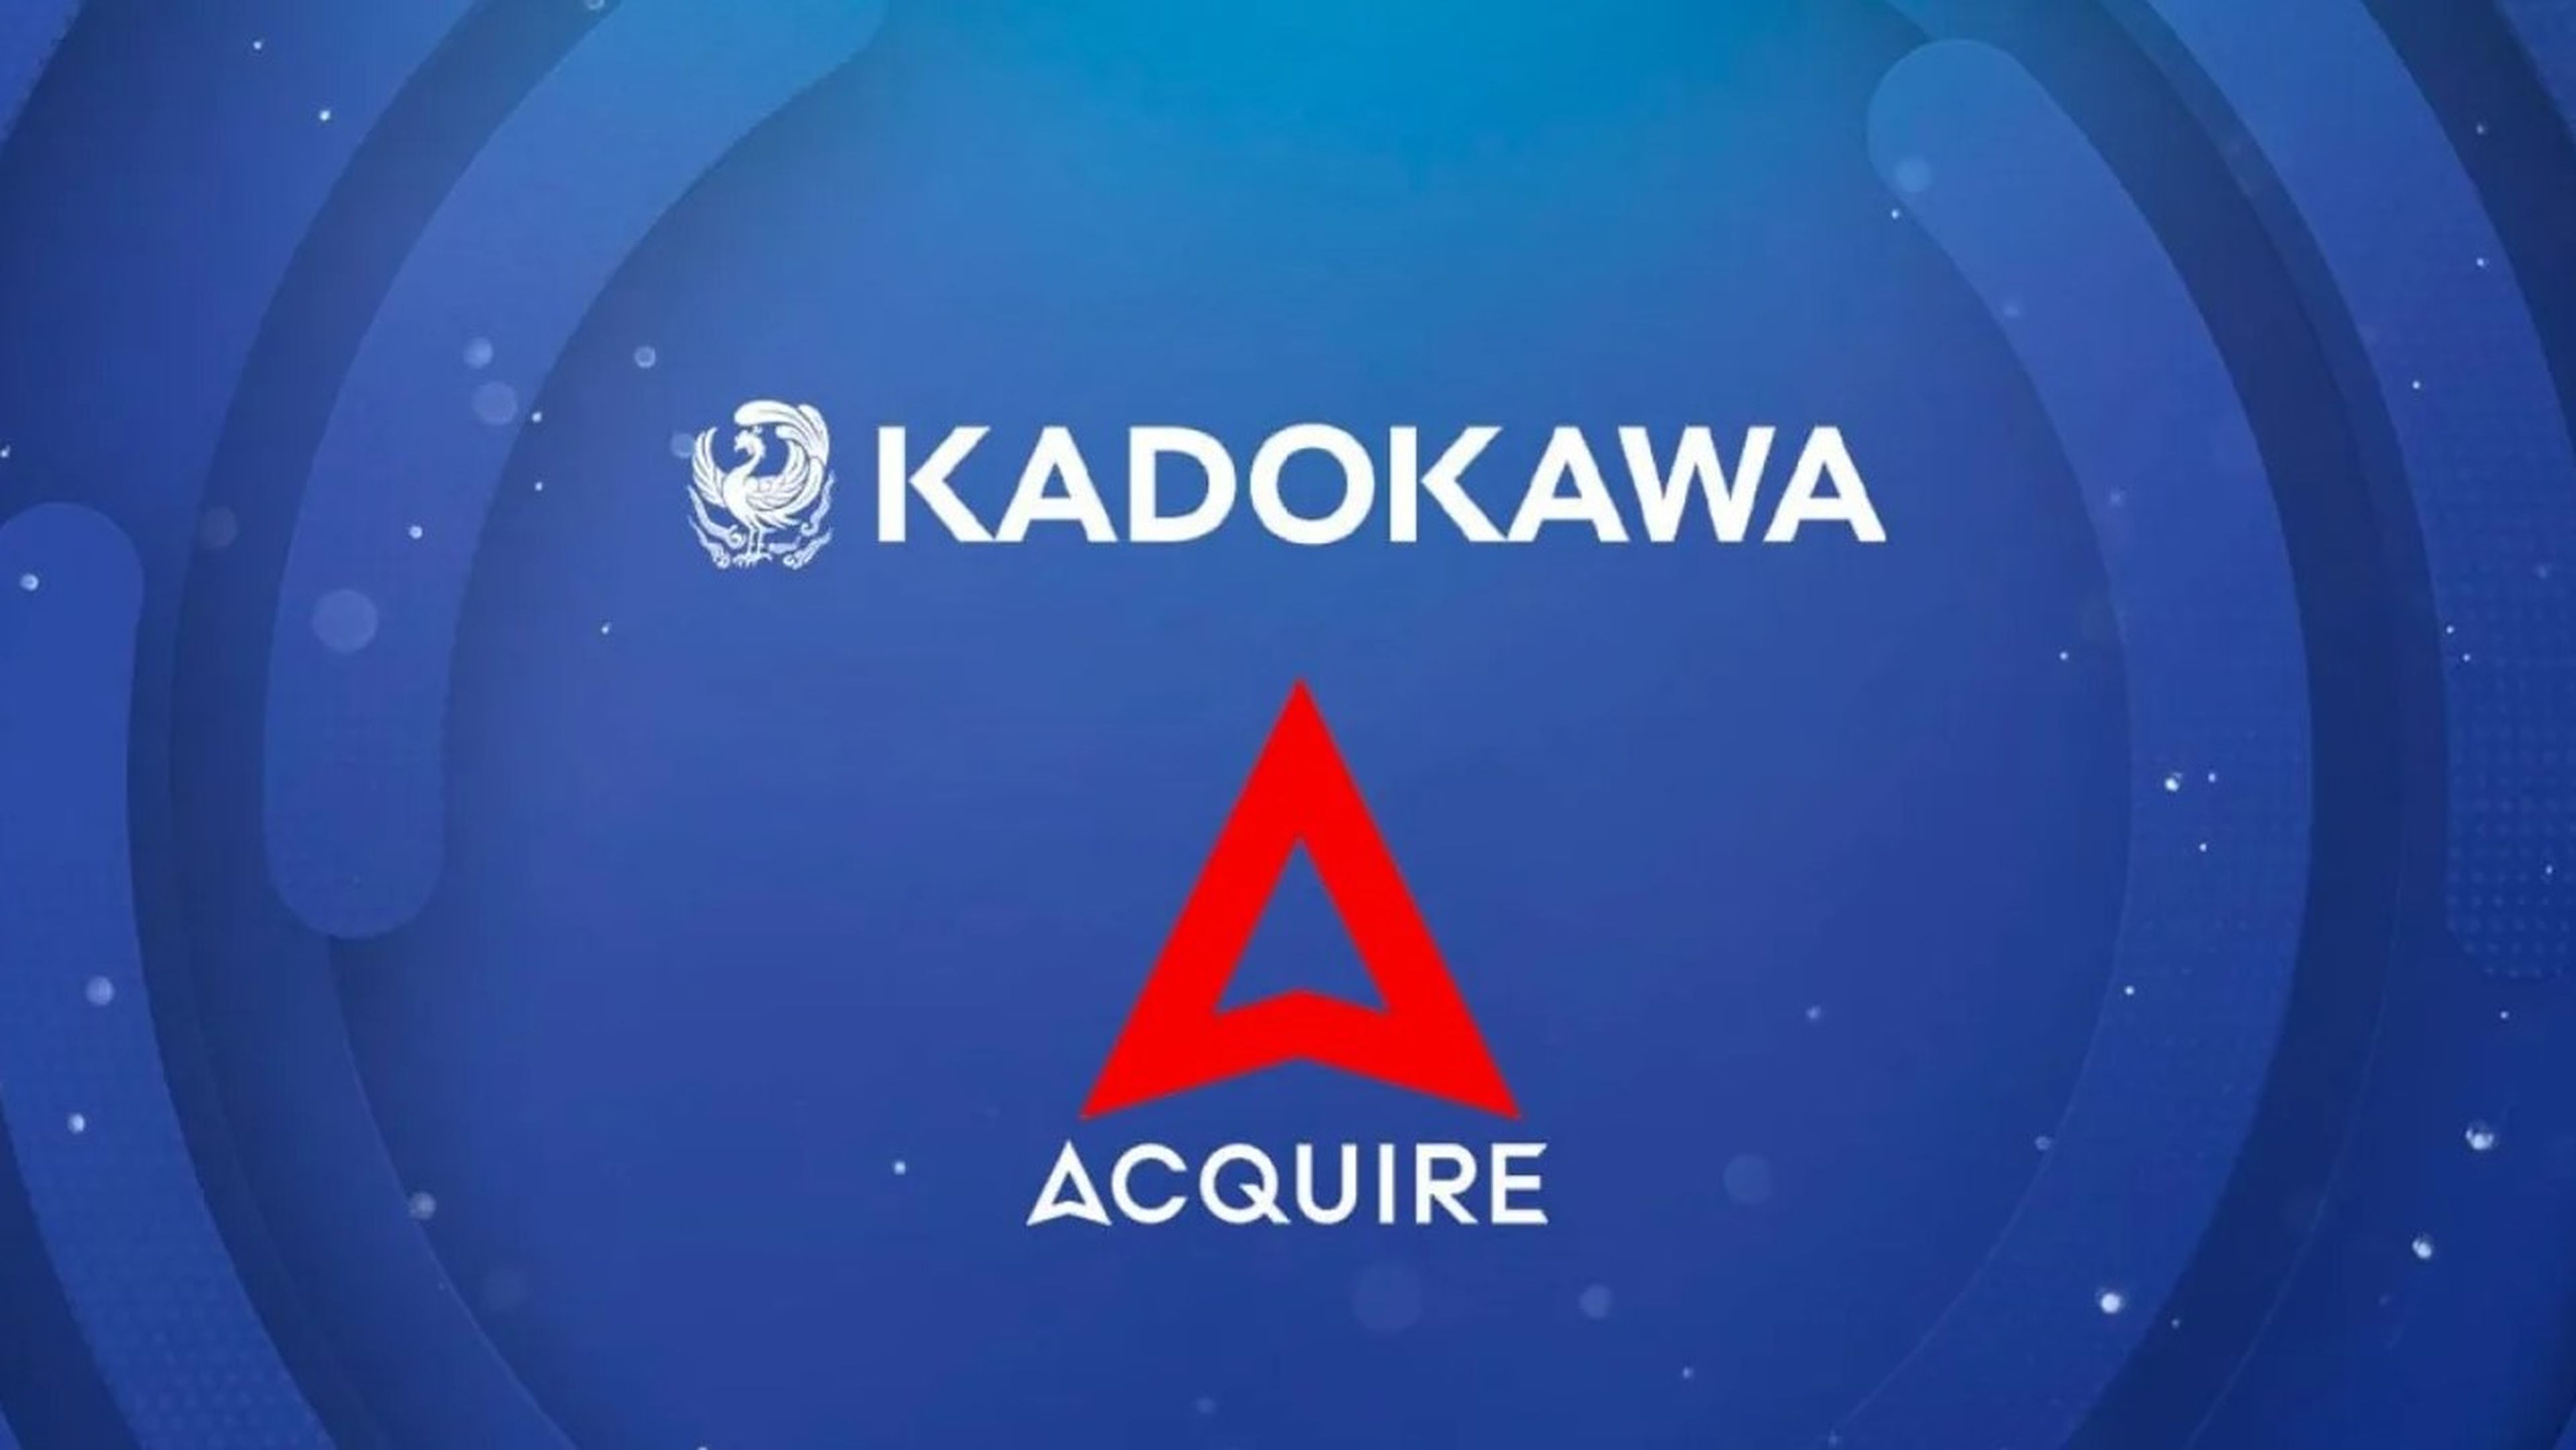 Kadokawa compra Acquire